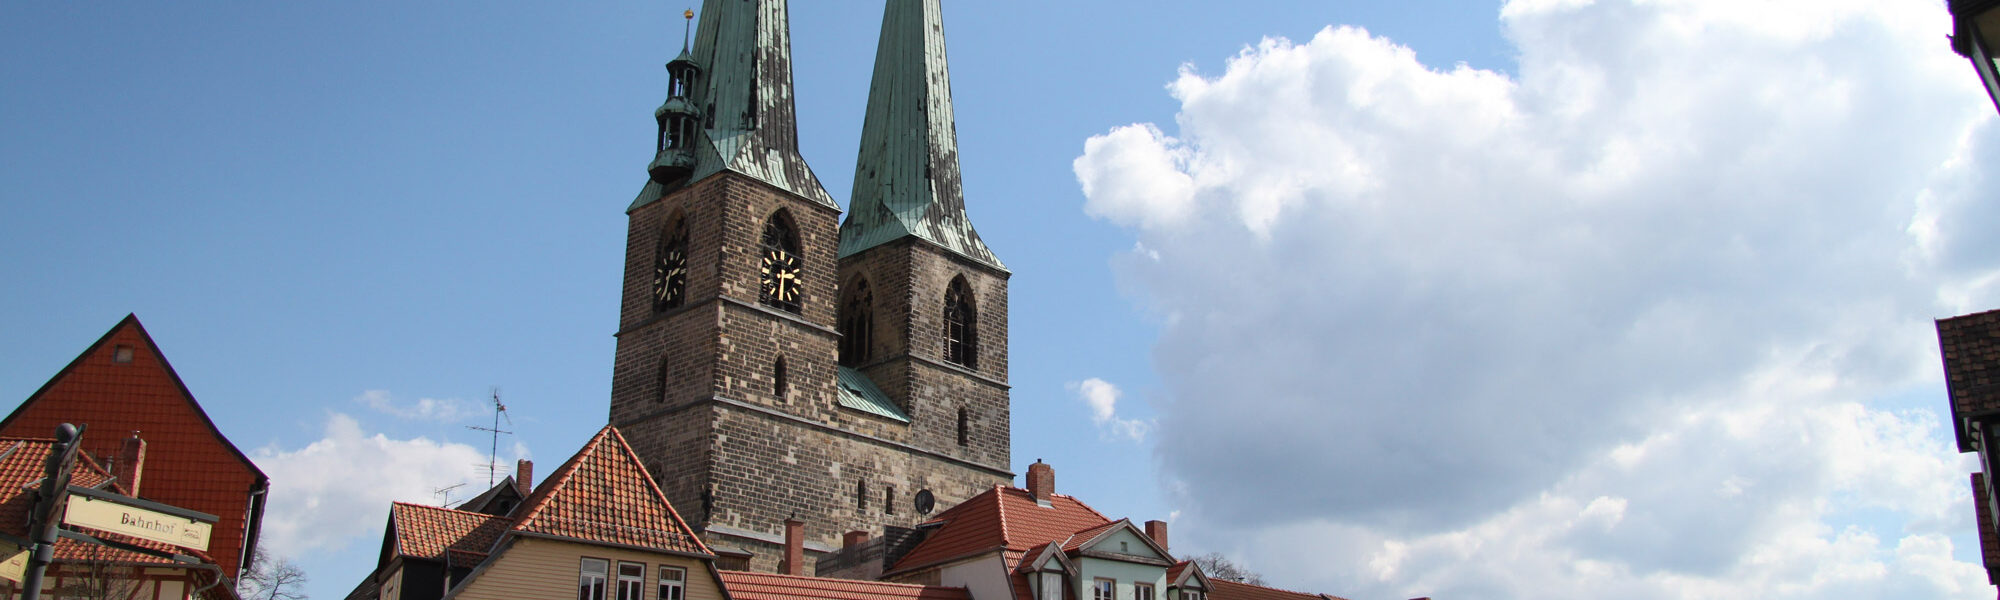 St. Nikolai Kirche - Quedlinburg - Duitsland